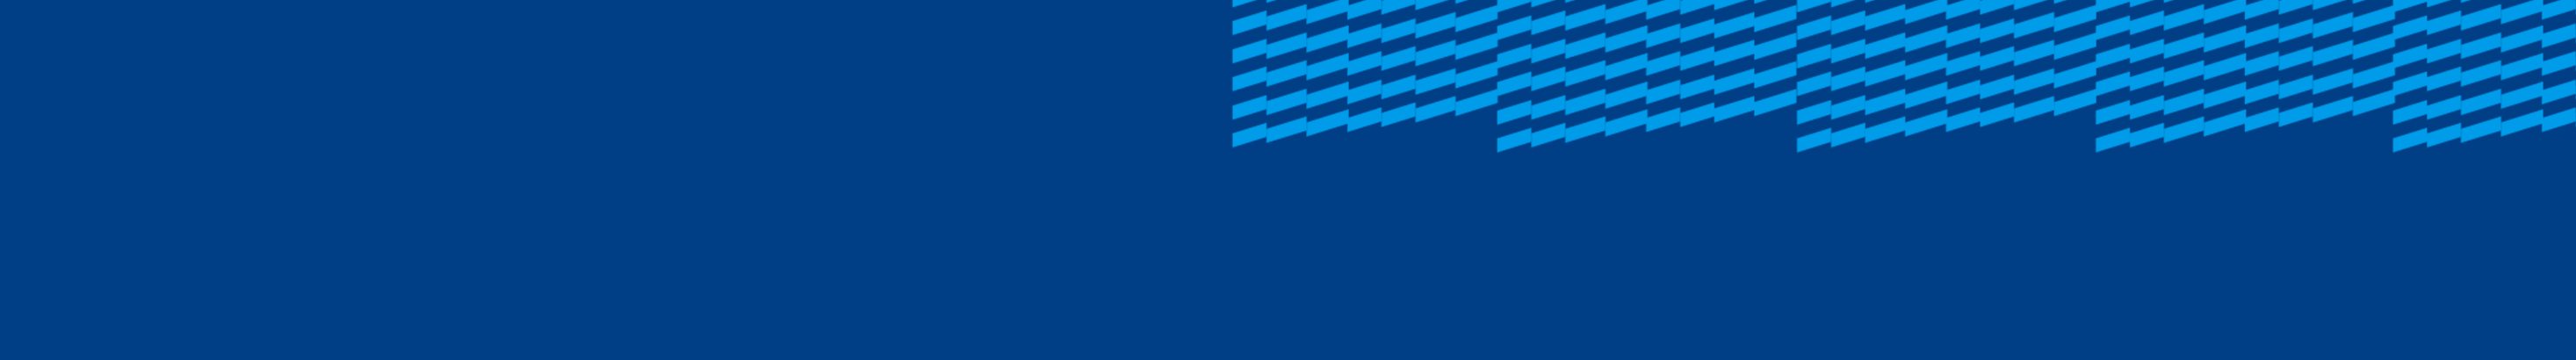 Agência Maxxsports's profile banner